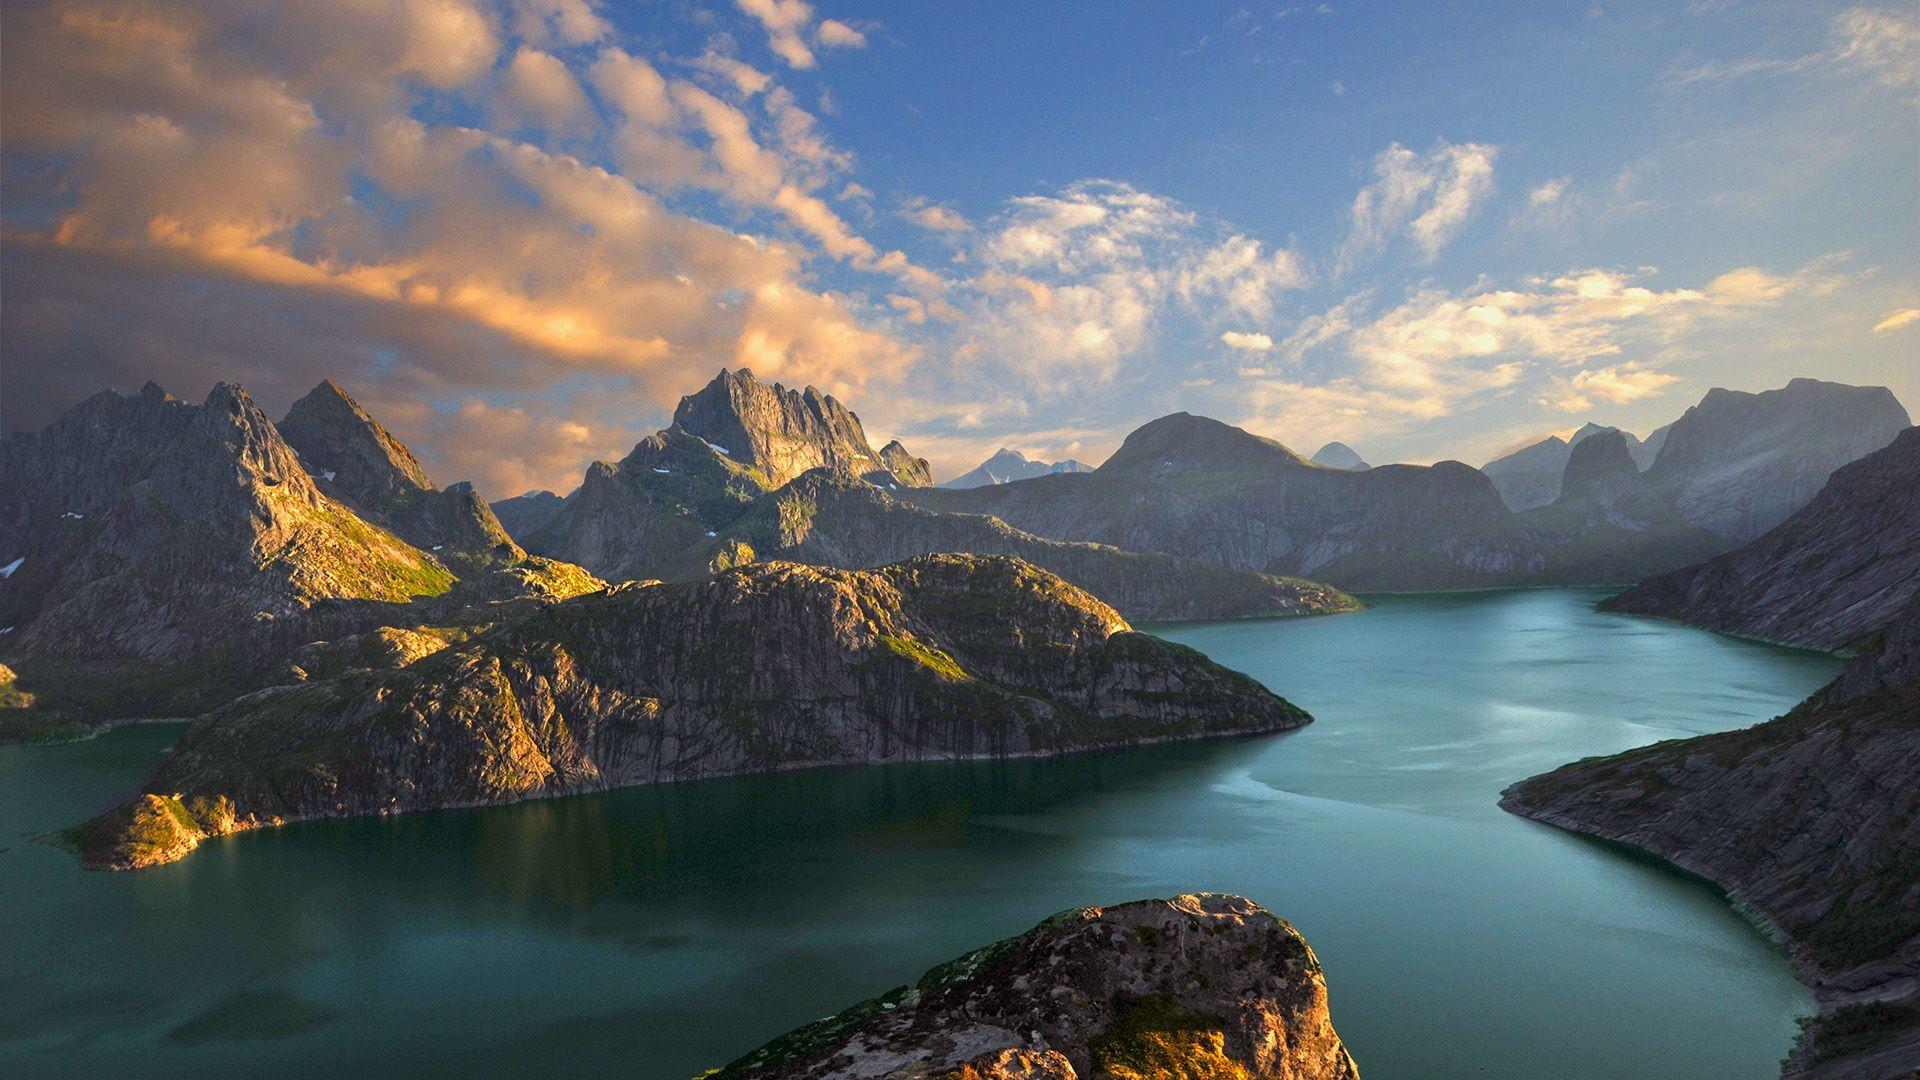 Desktop Image of Norway